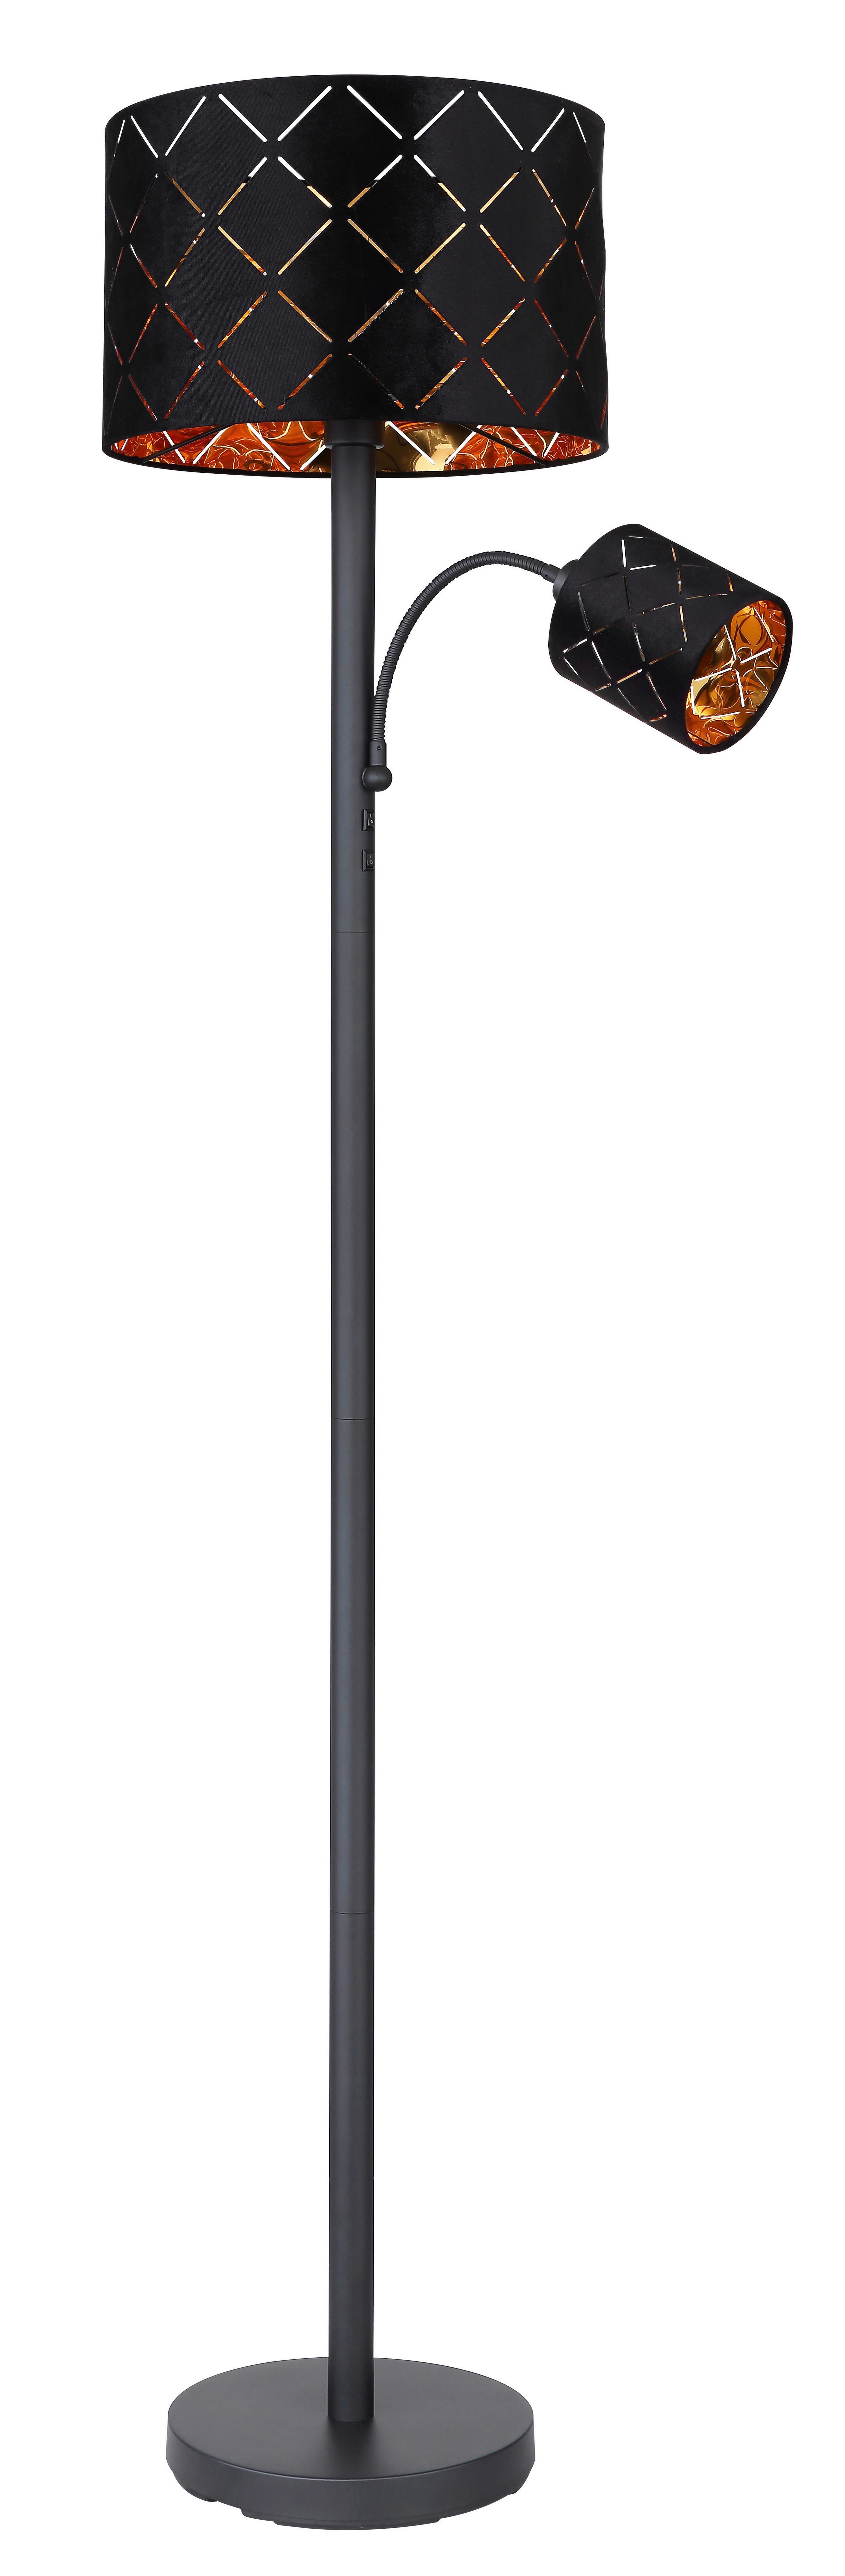 LAMPA STOJĄCA MANFRIED - czarny, Modern, metal/tkanina (35/162cm) - Premium Living